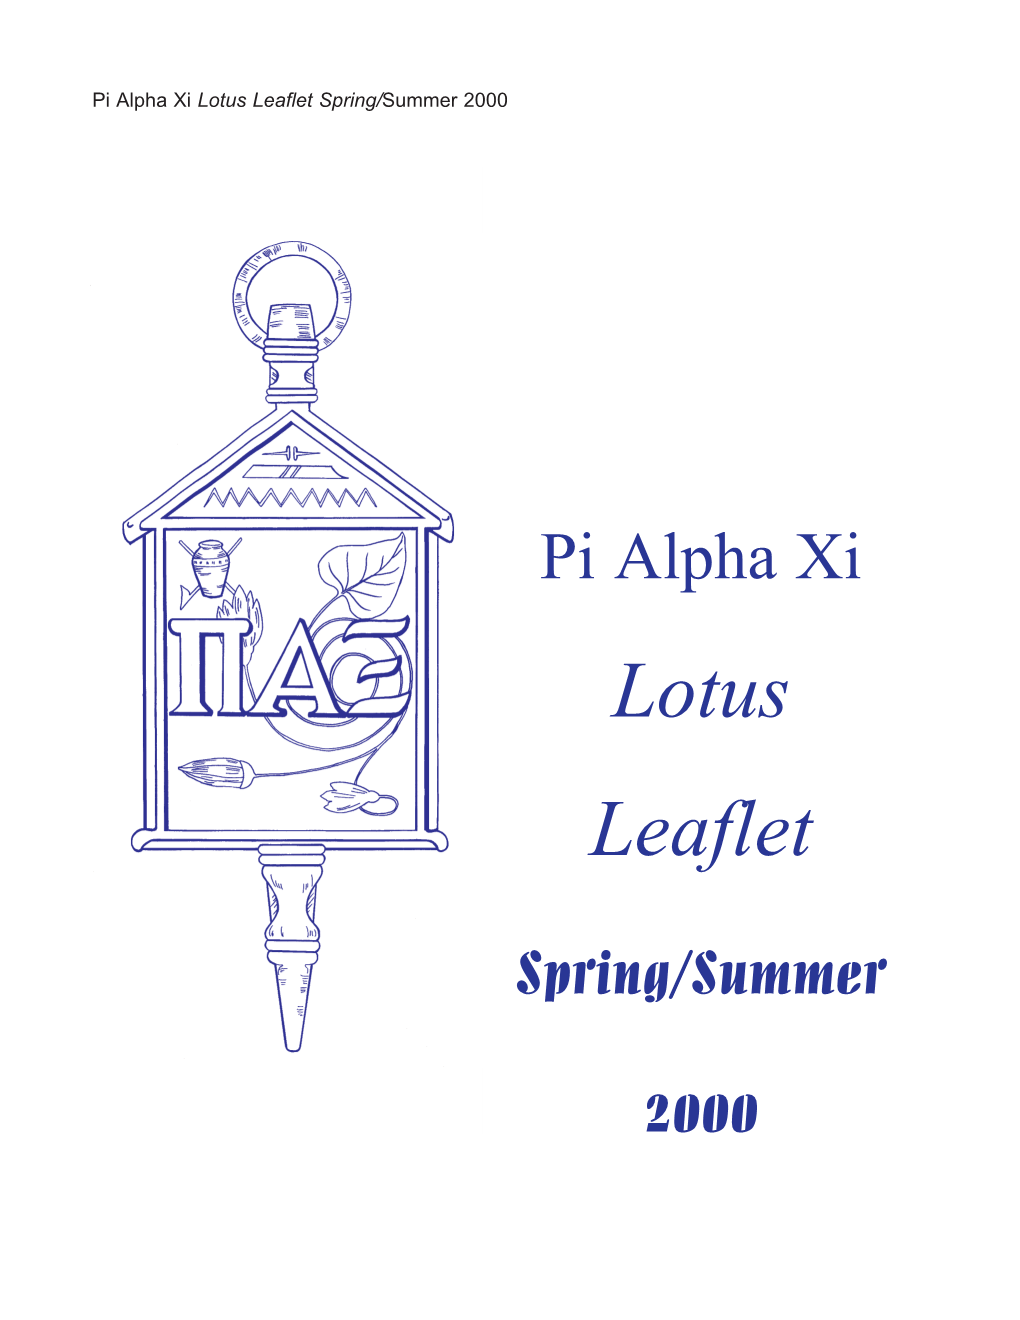 Lotus Leaflet Spring/Summer 2000